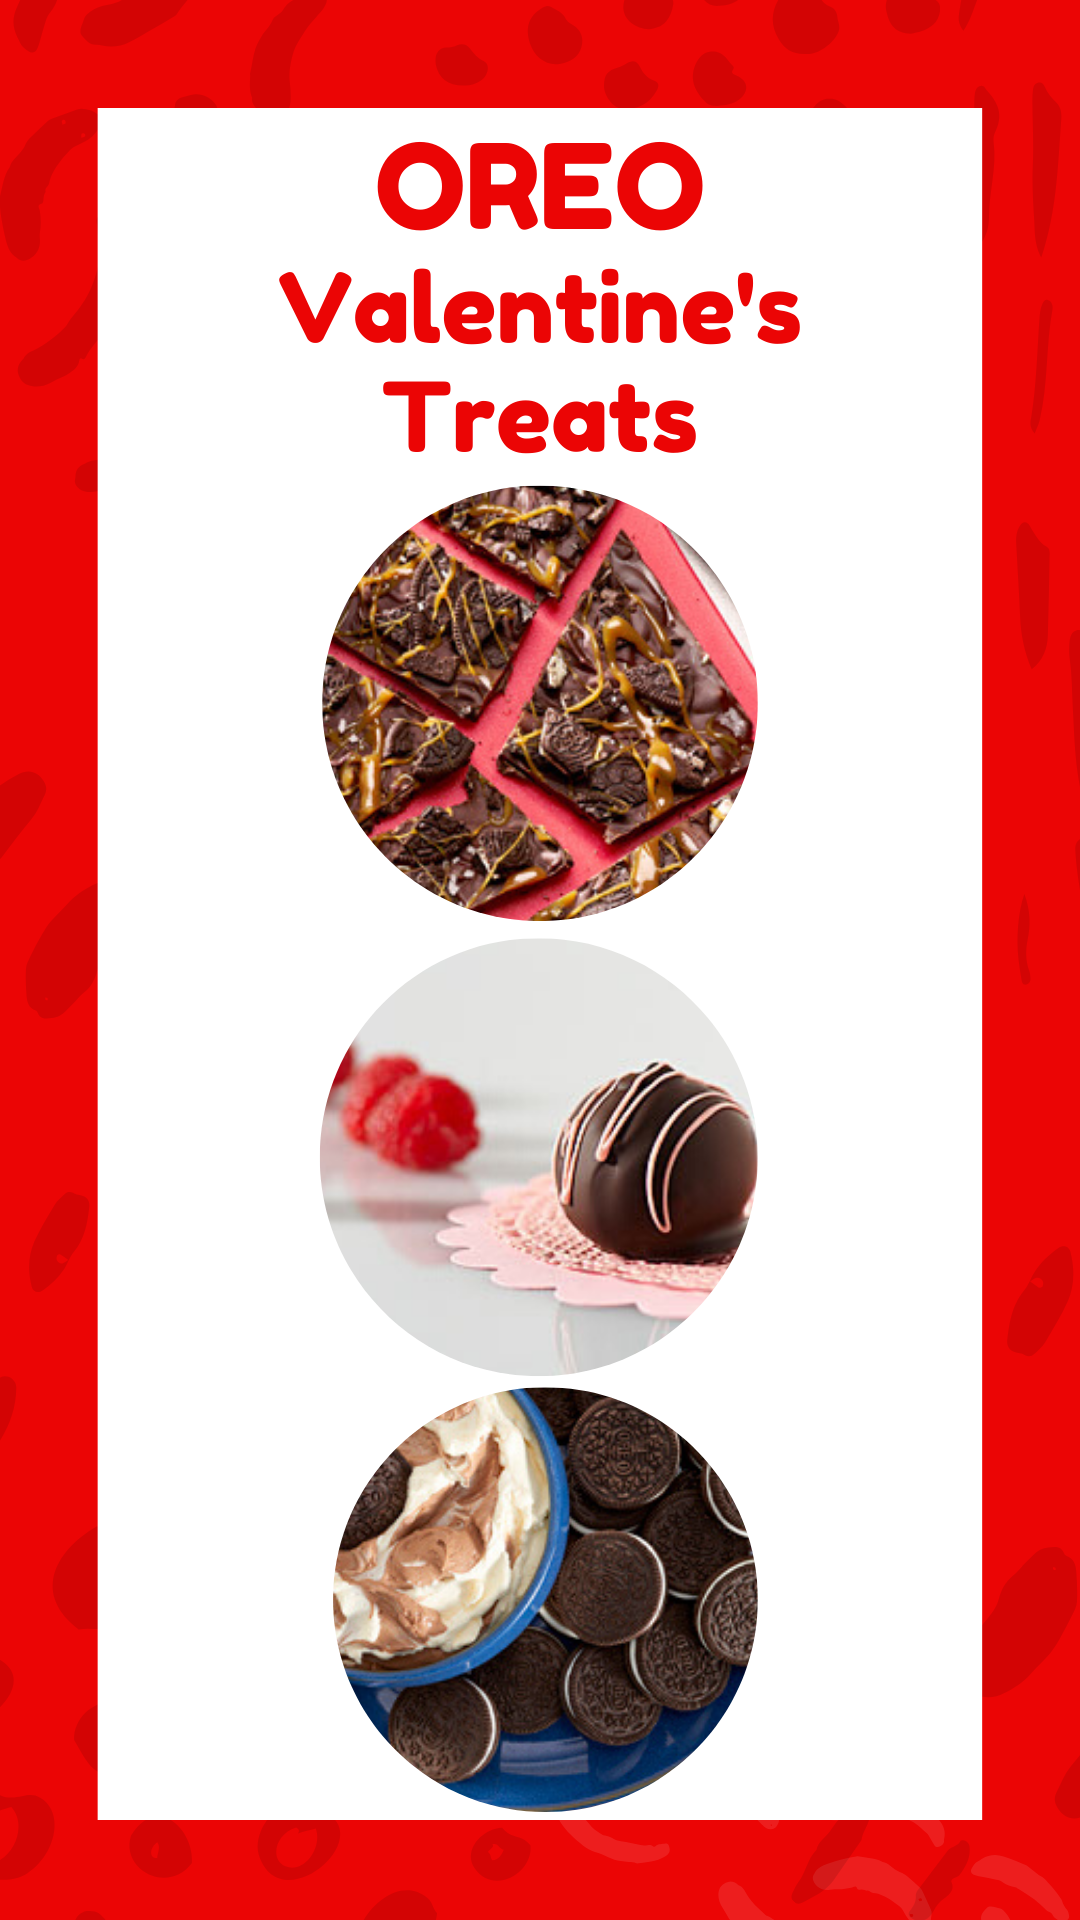 OREO Cookies Valentine's Day Recipes